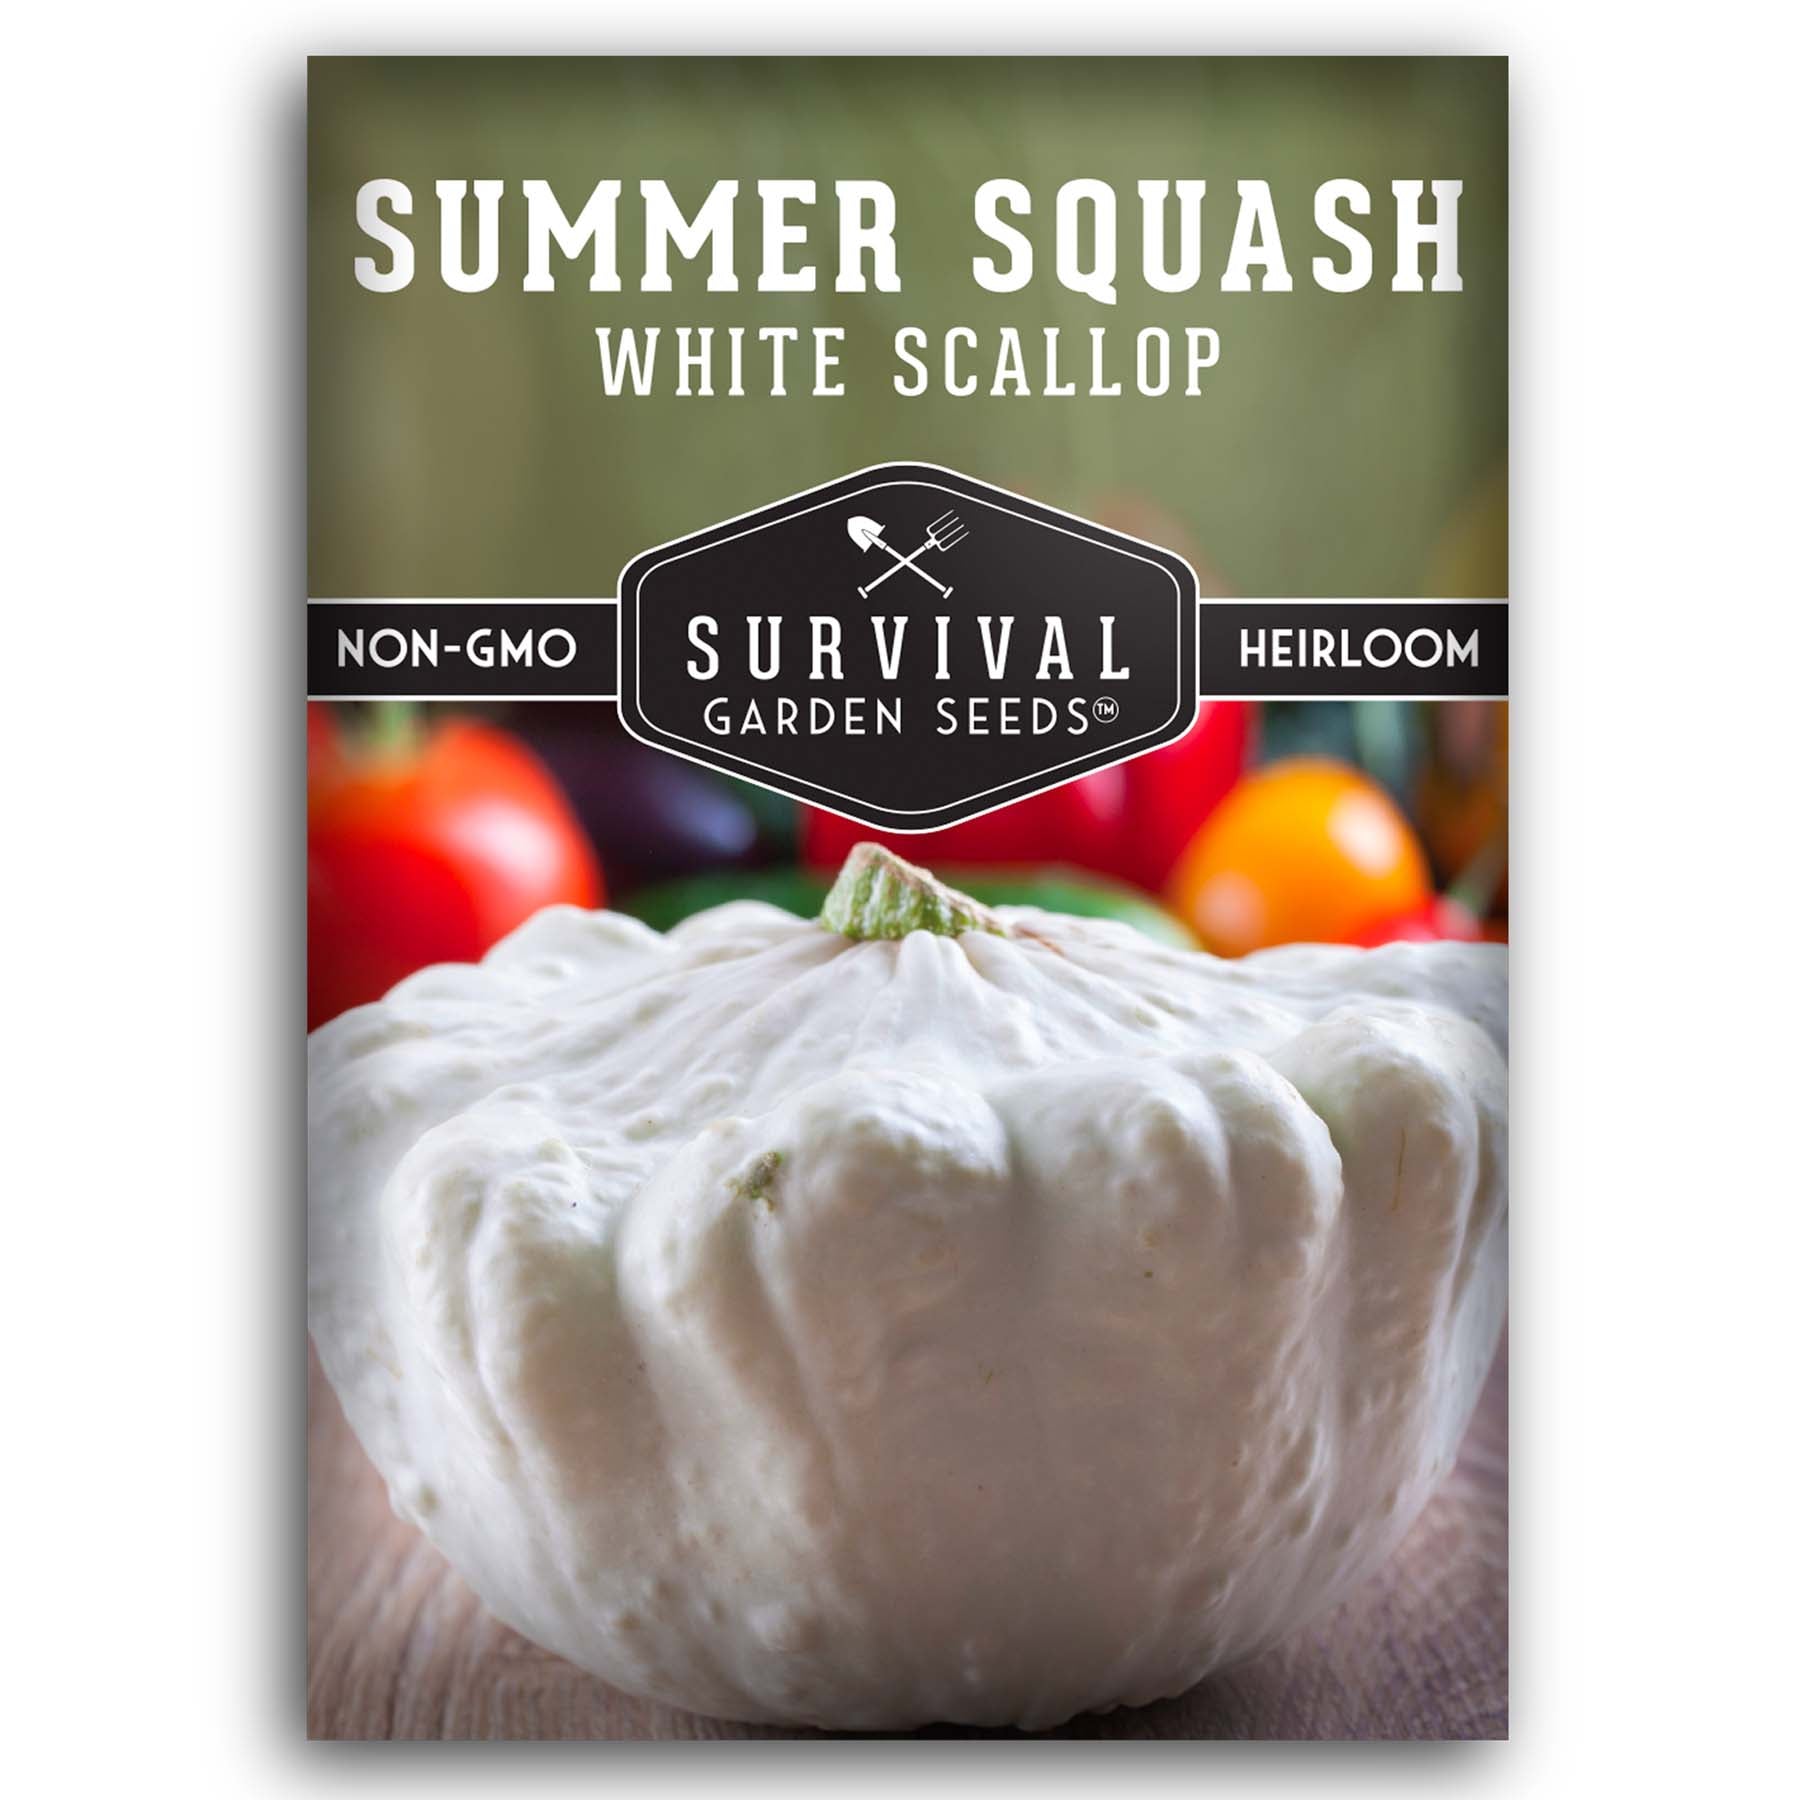 White Scallop Summer Squash seeds